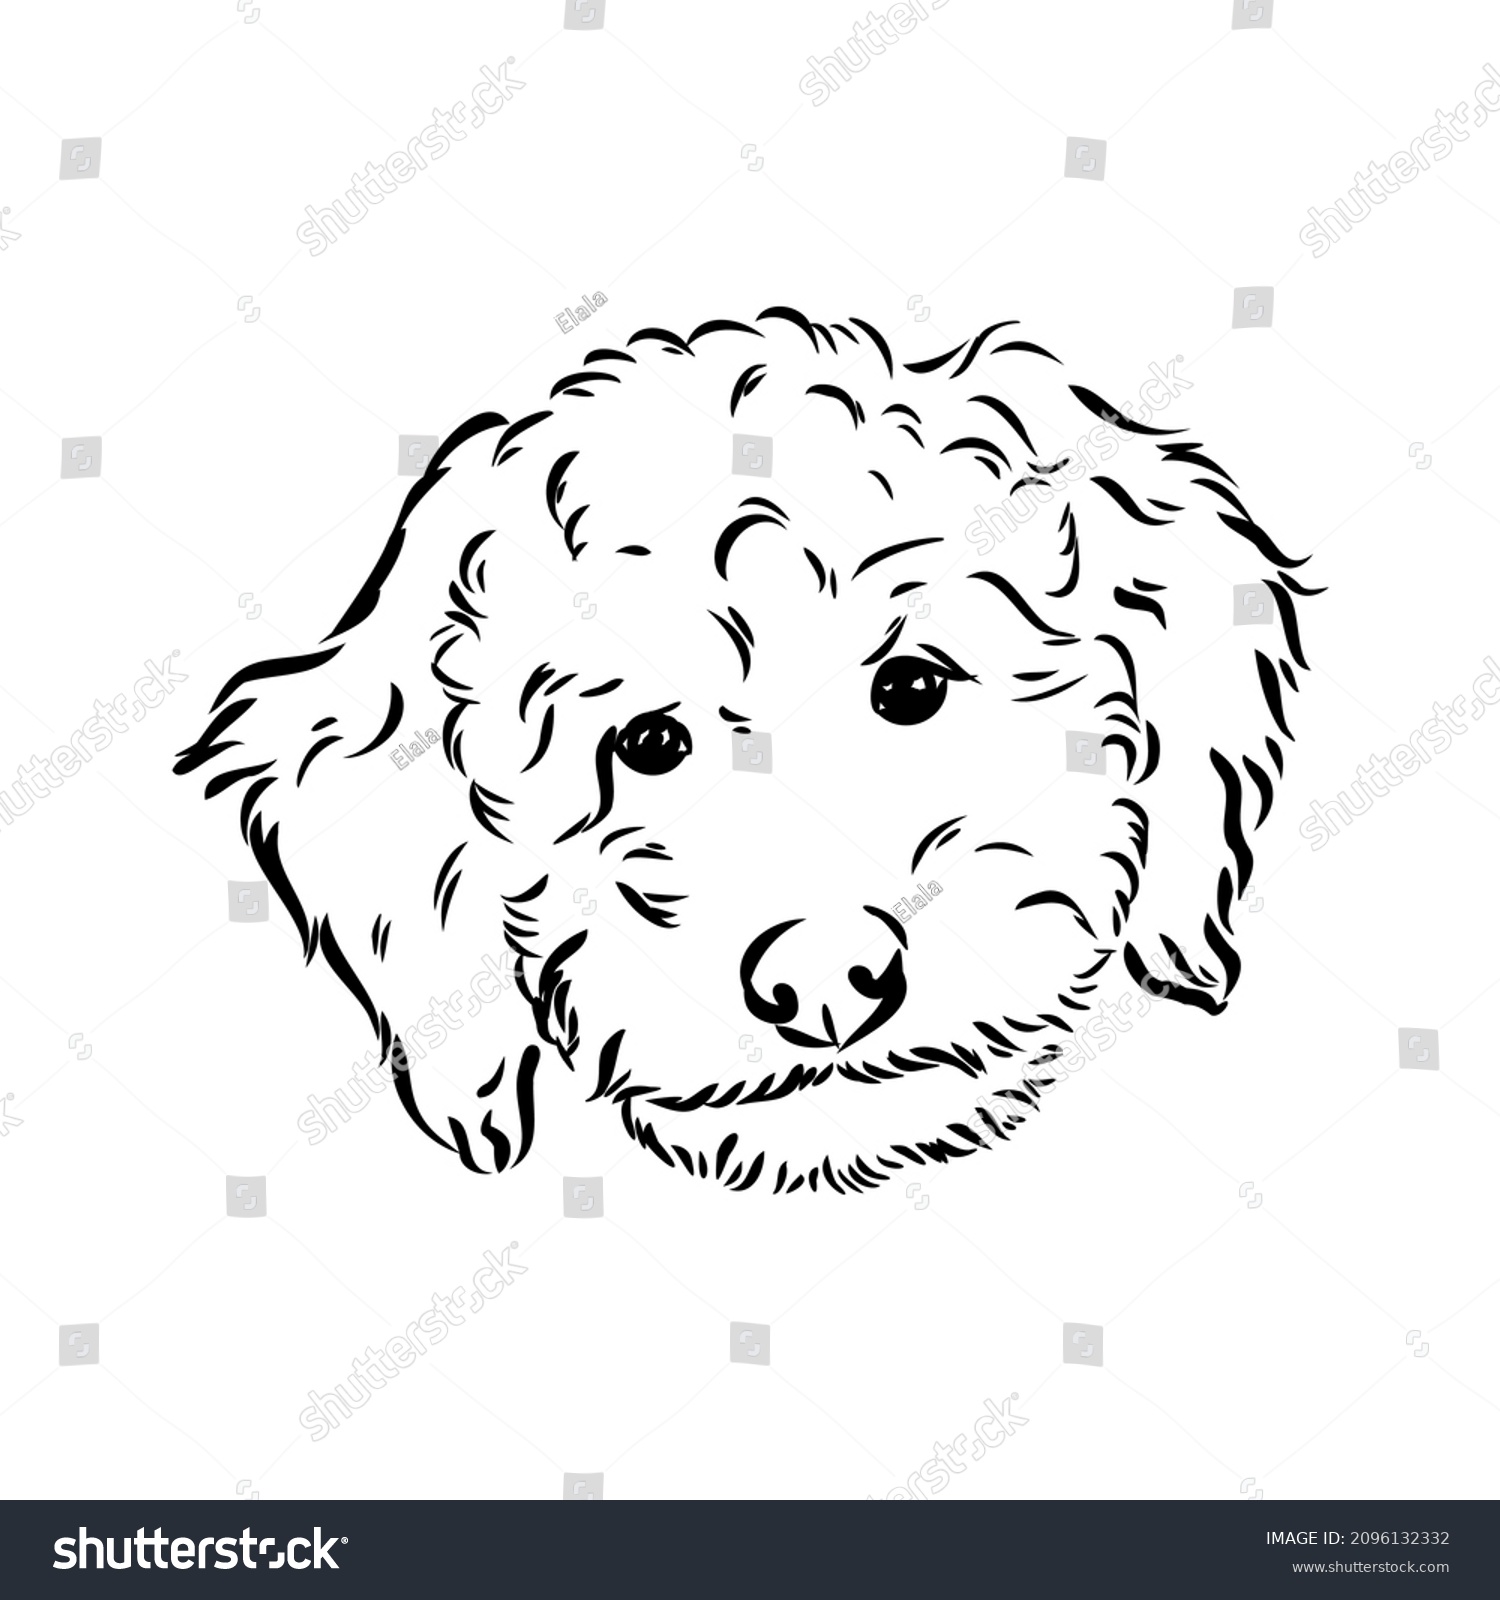 SVG of Labradoodle Mix dog - vector isolated illustration on white background svg